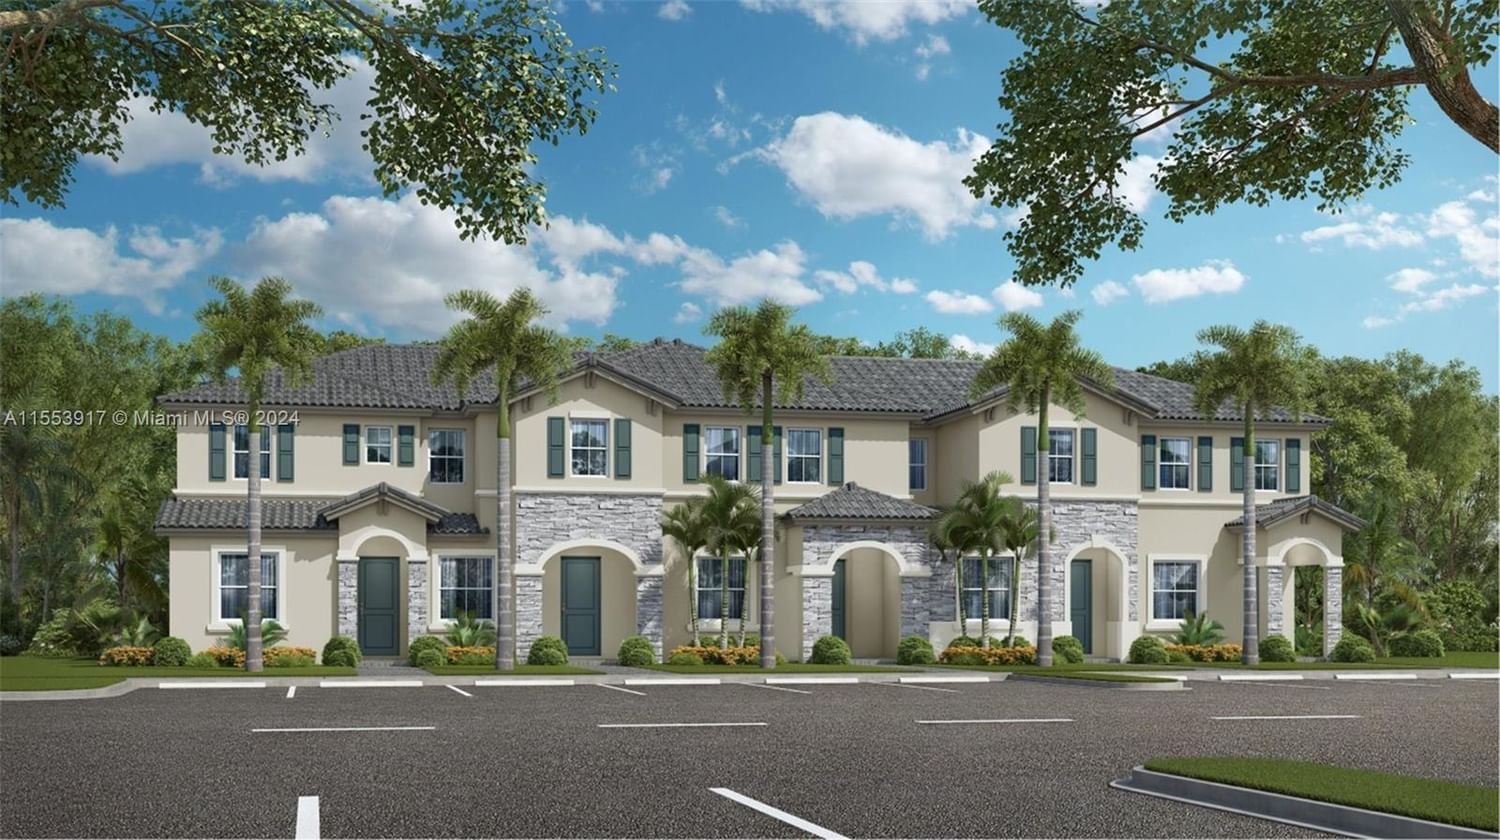 Real estate property located at 29279 163 ct, Miami-Dade County, Cedar Pointe, Homestead, FL